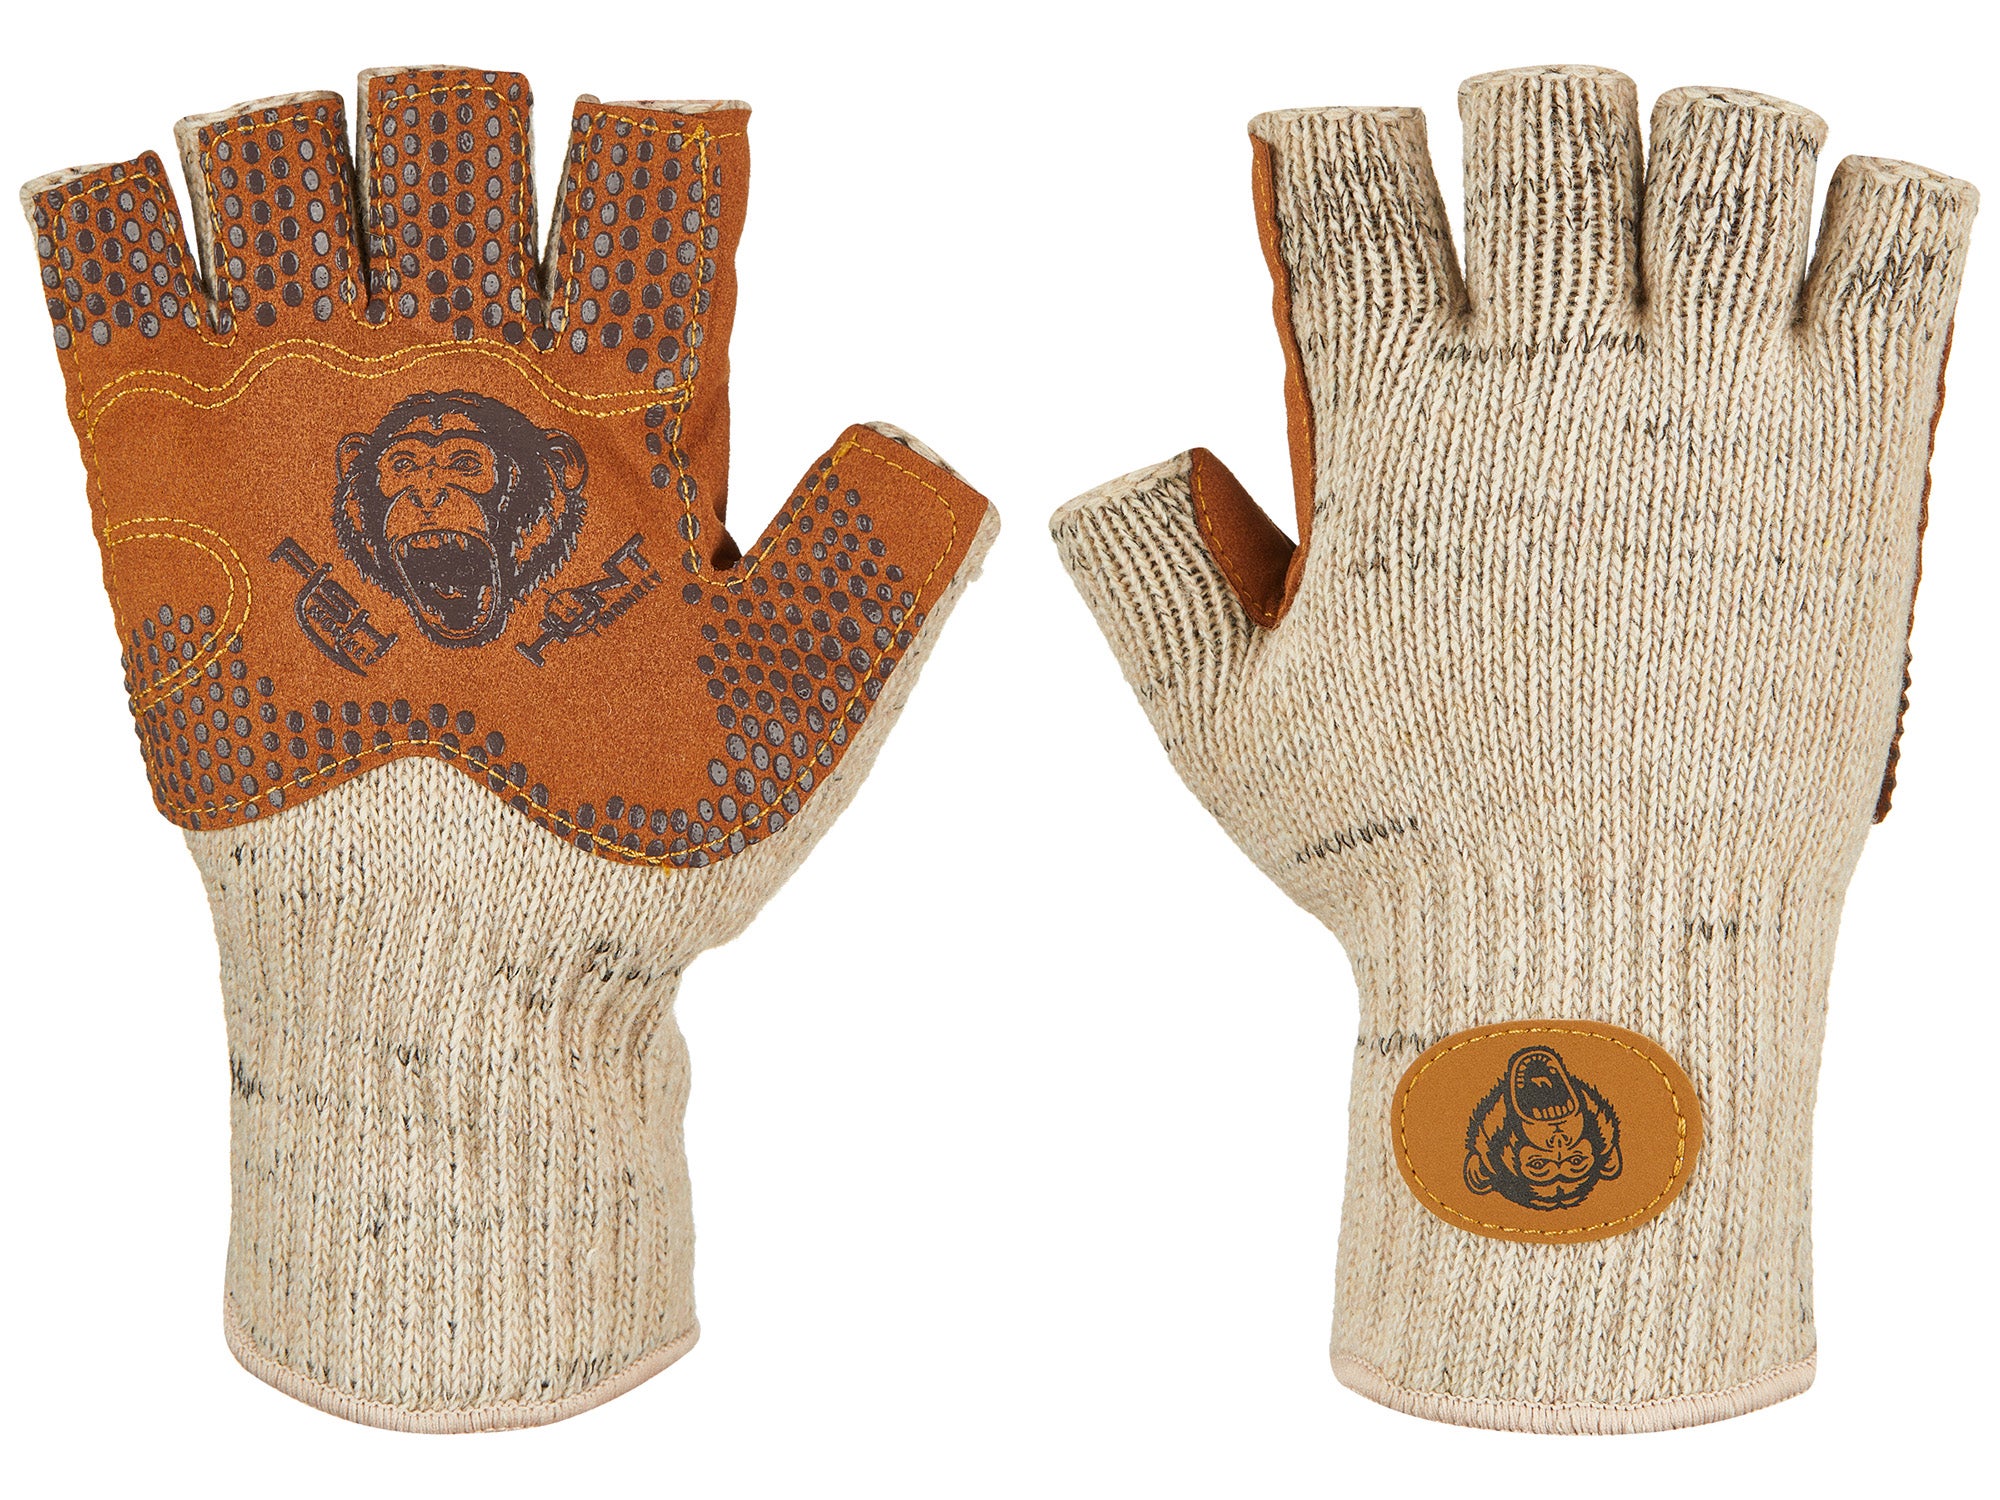 Fish Monkey FM30-WHL-S 1/2/2020 Small/Medium Wooly Glove 